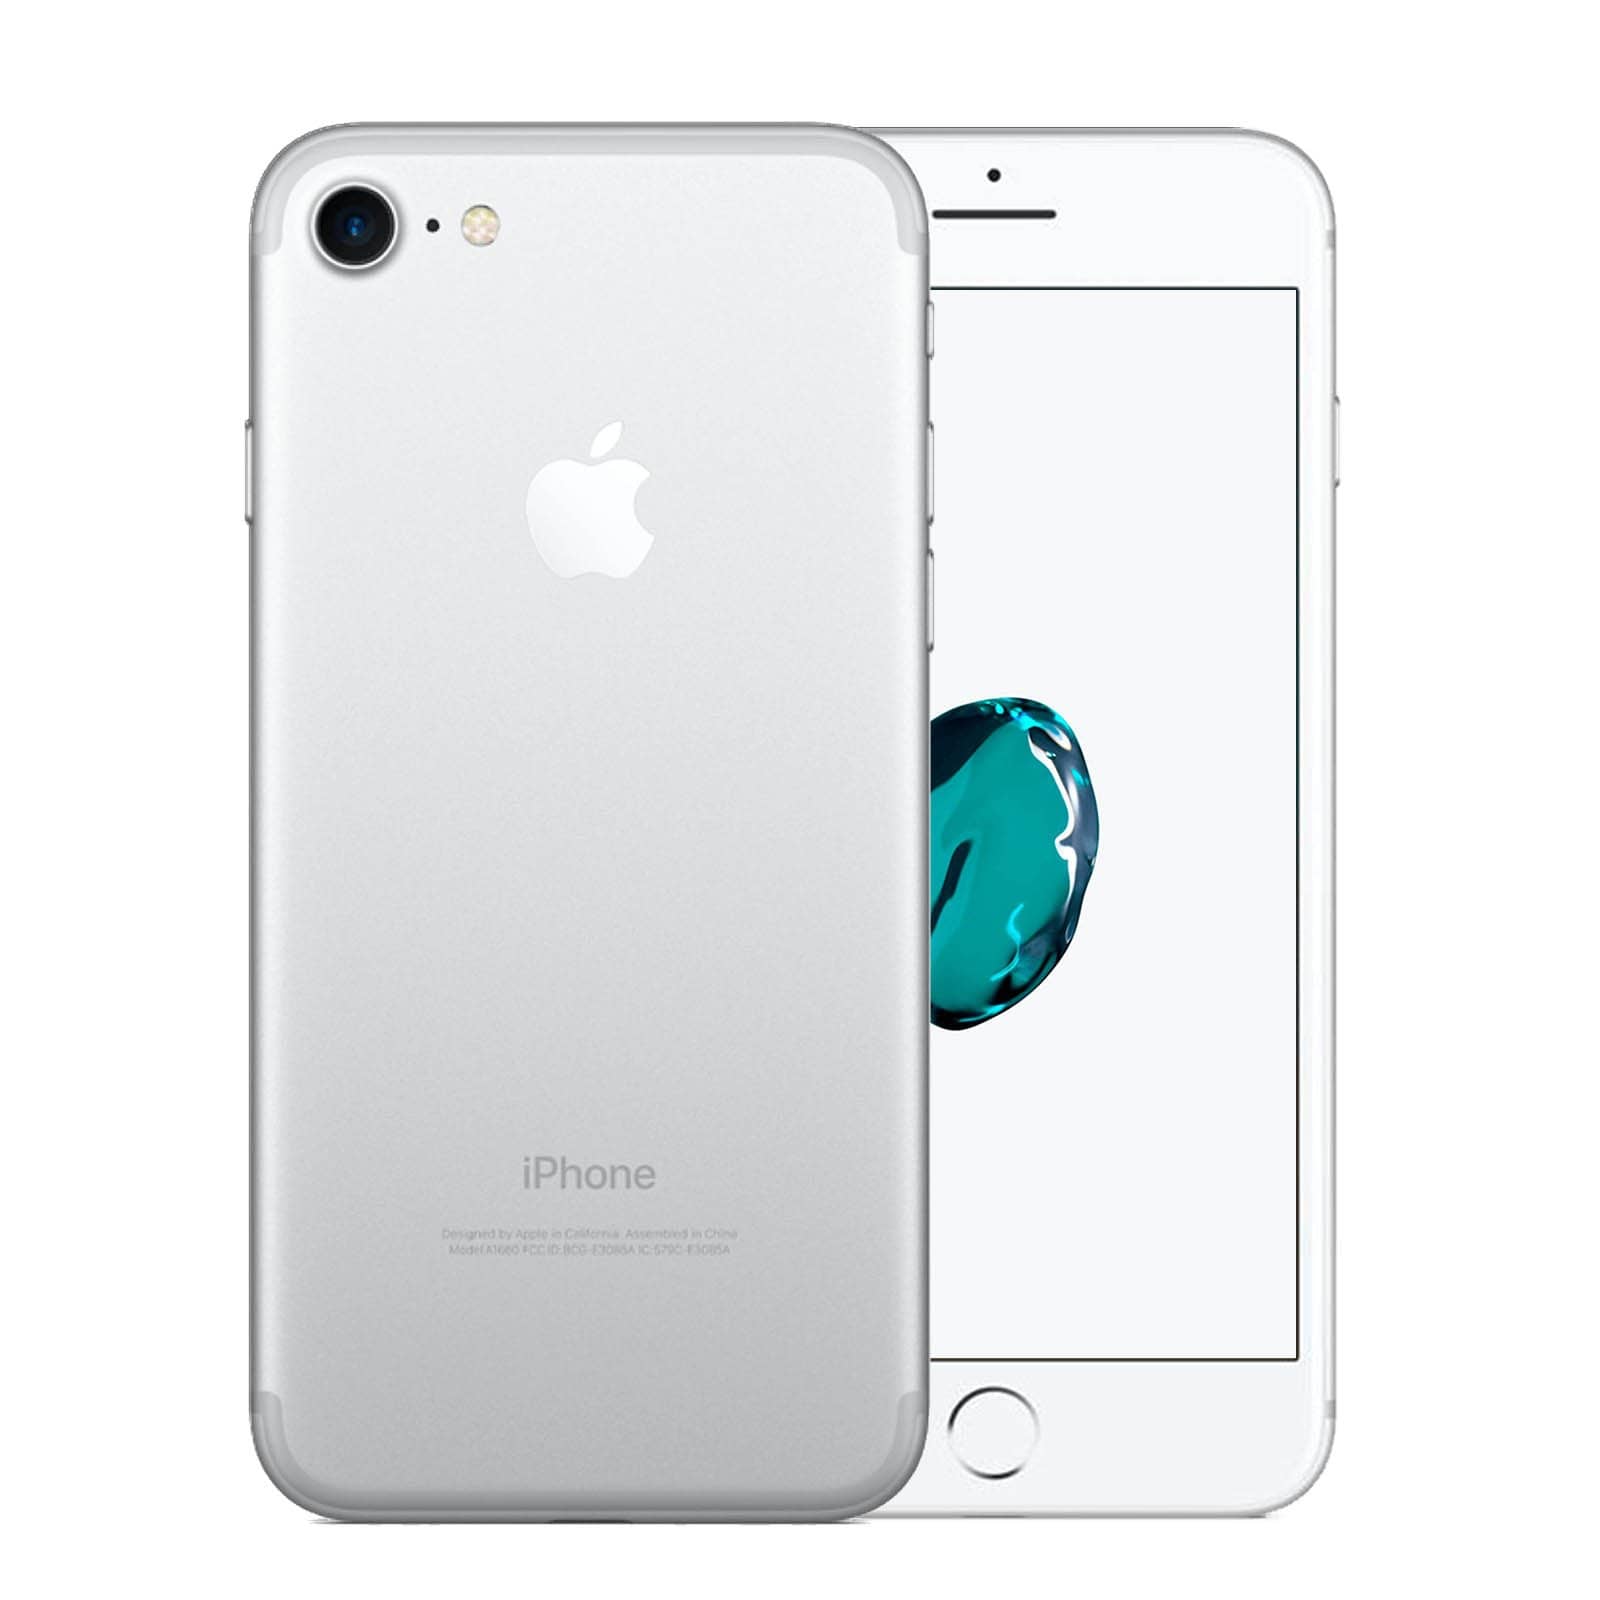 Apple iPhone 7 256GB Silver Good - Unlocked 256GB Silver Good